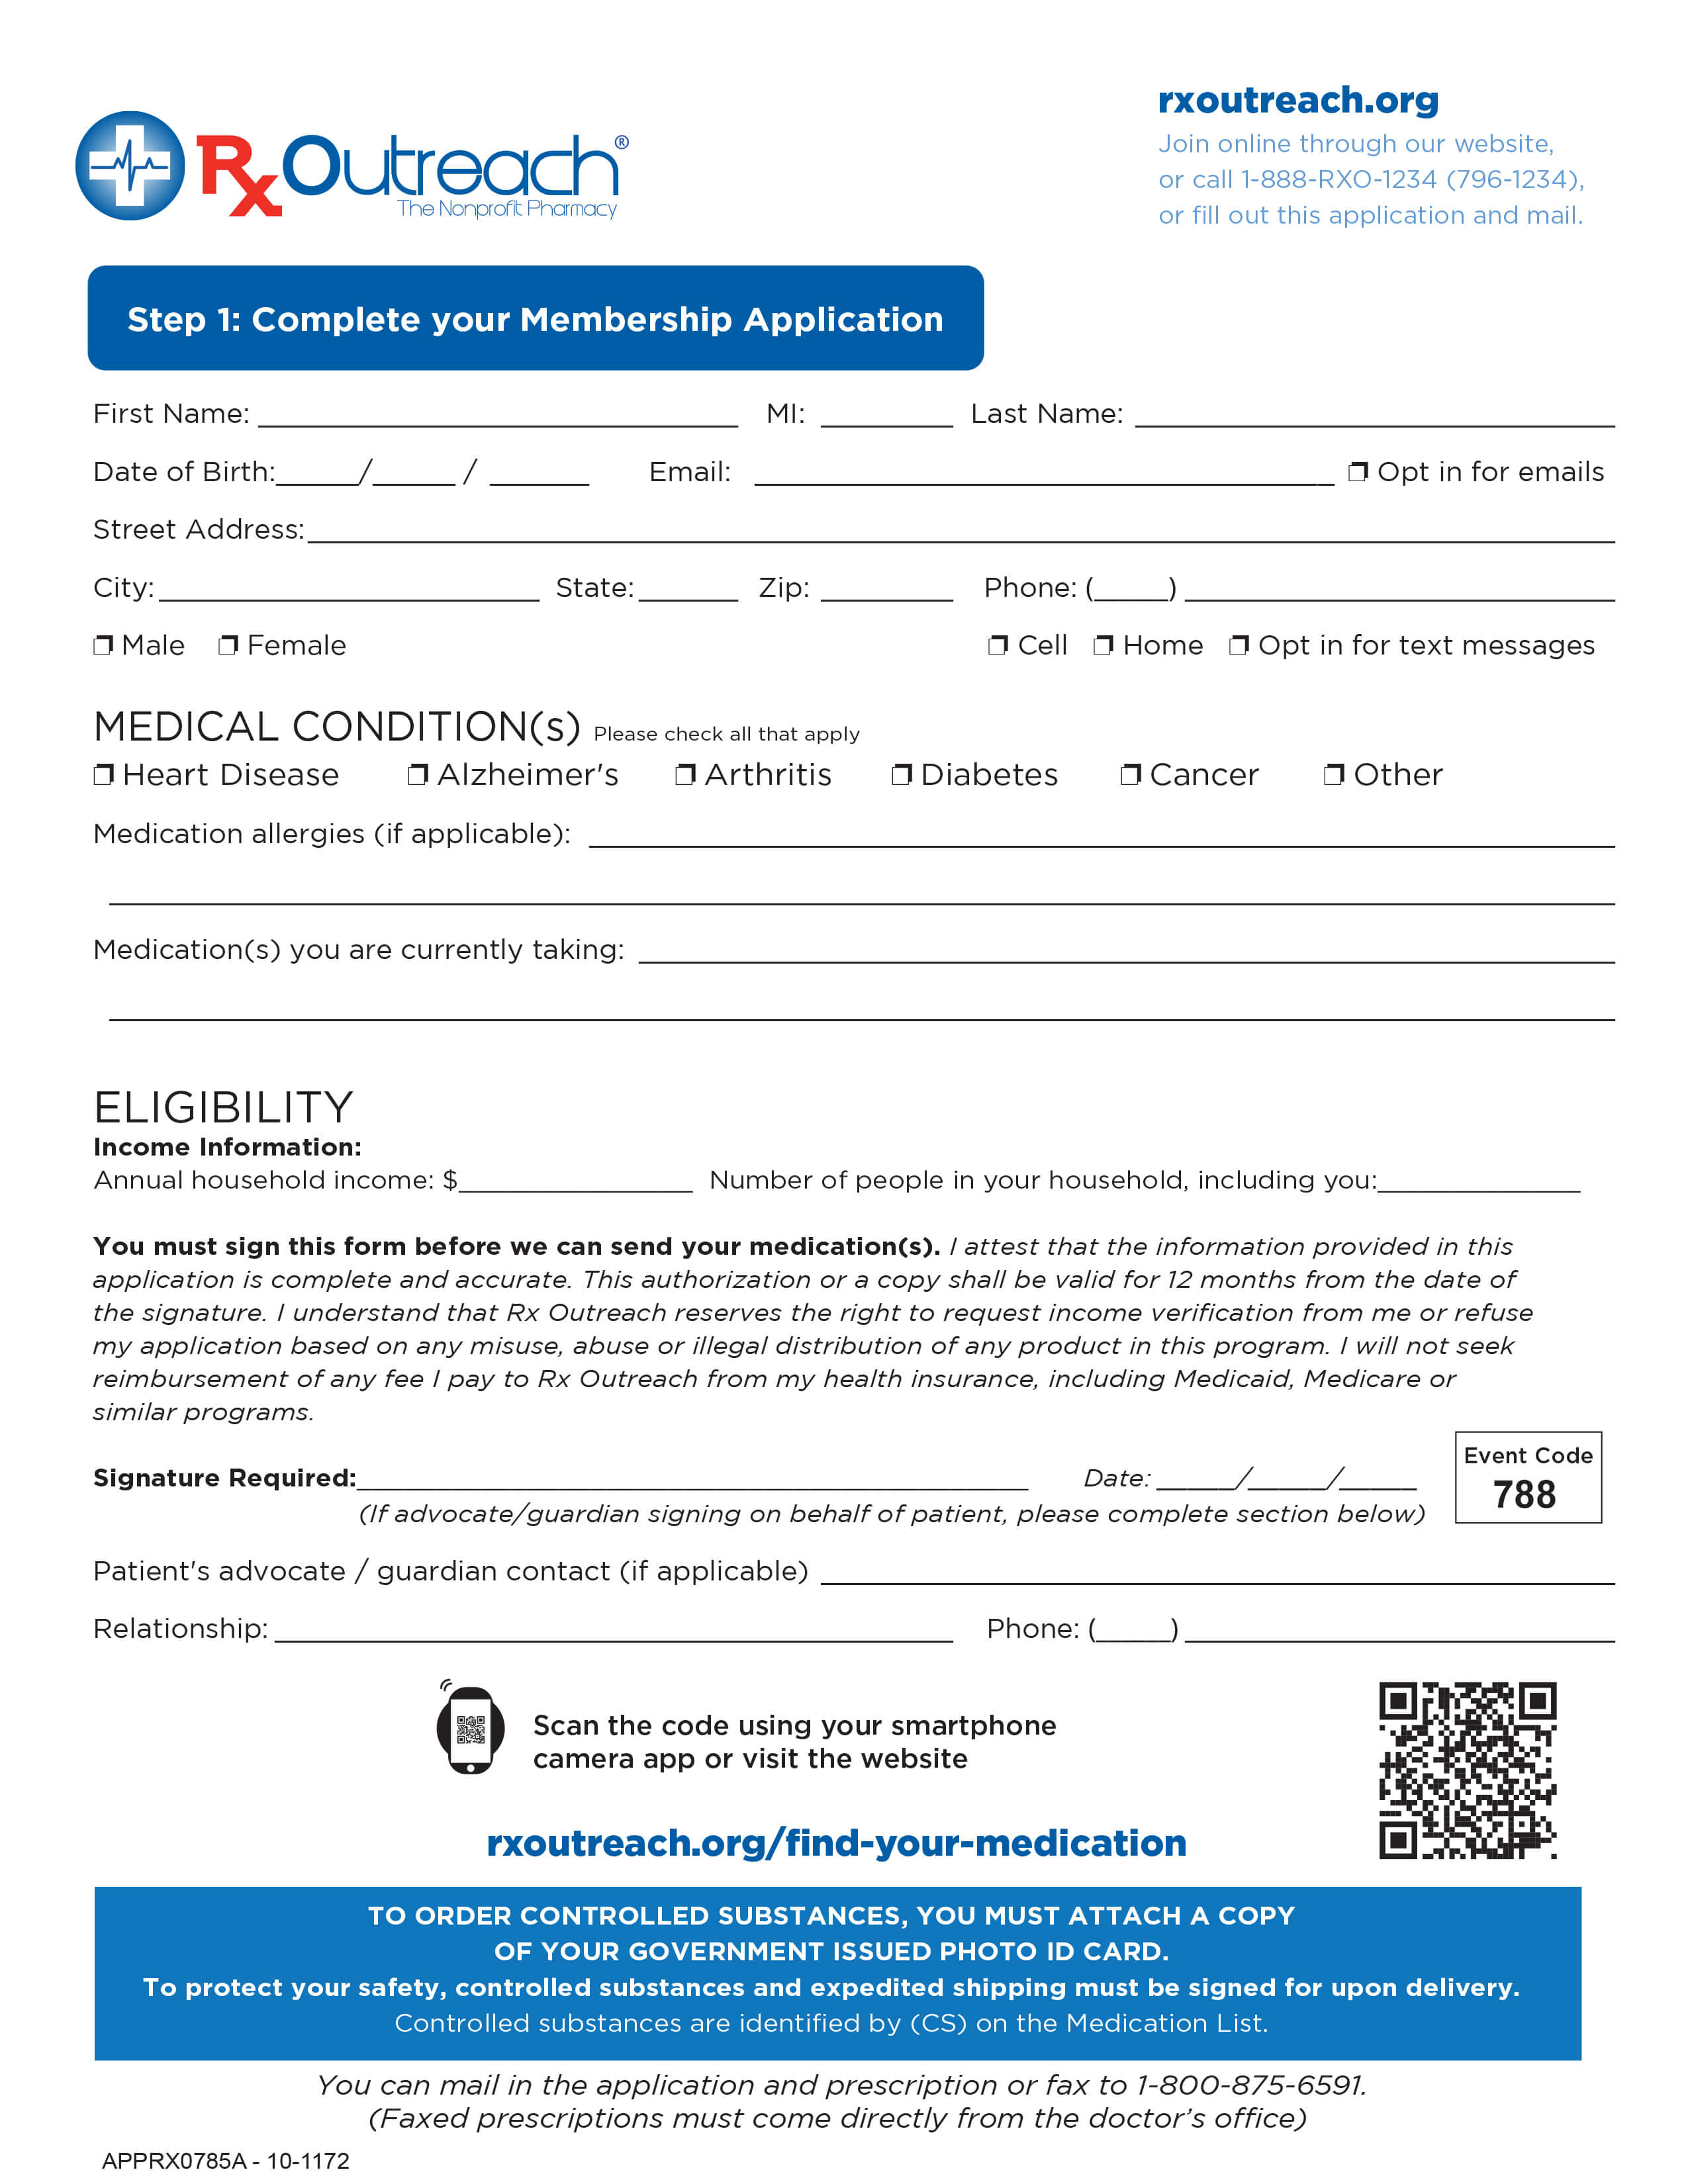 Rx Outreach Membership Application, Prescription Order Form, and OTC Order Form 12 copy